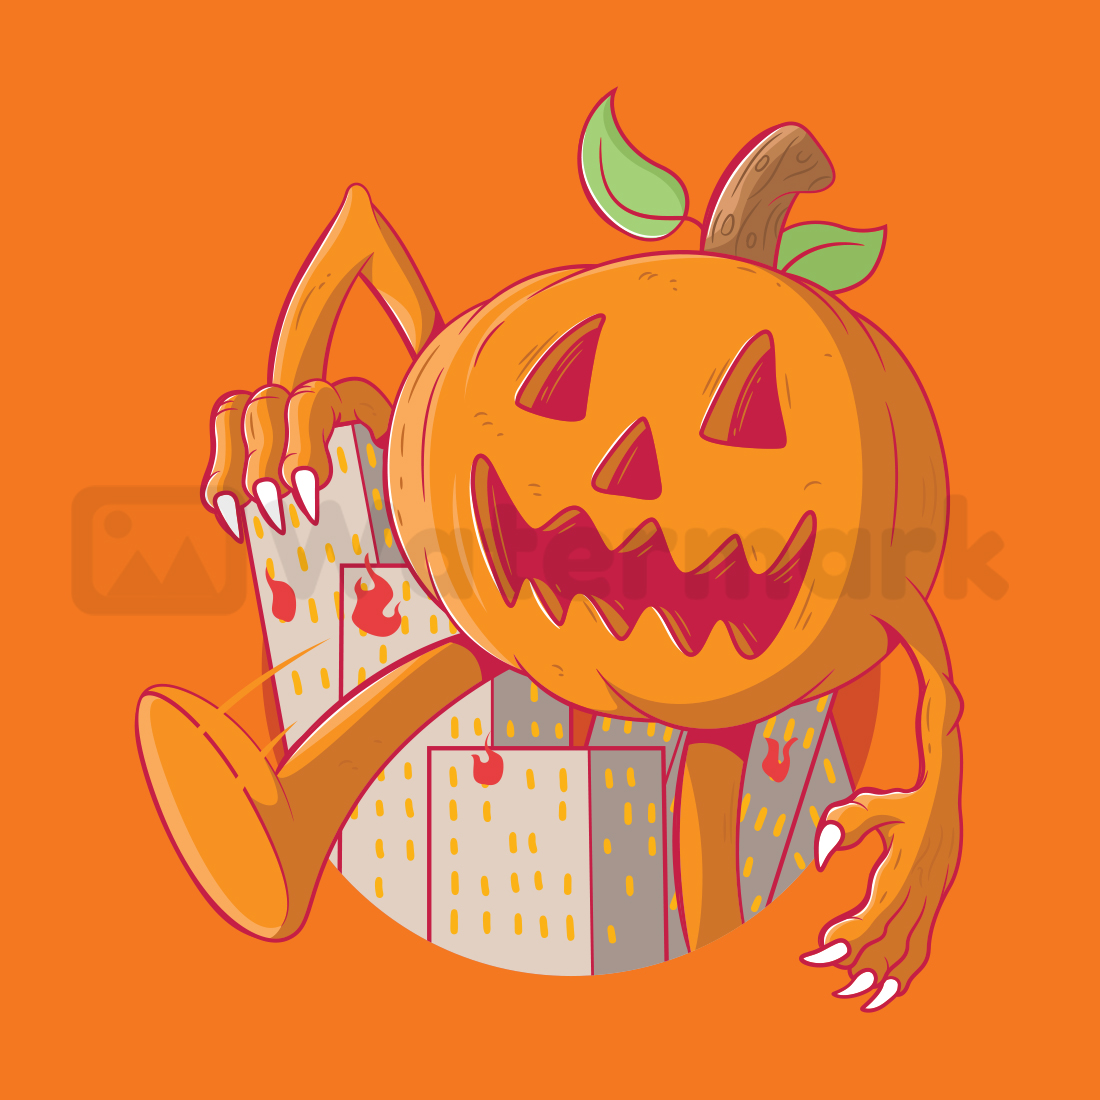 Monster Pumpkin Vector Illustration cover image.